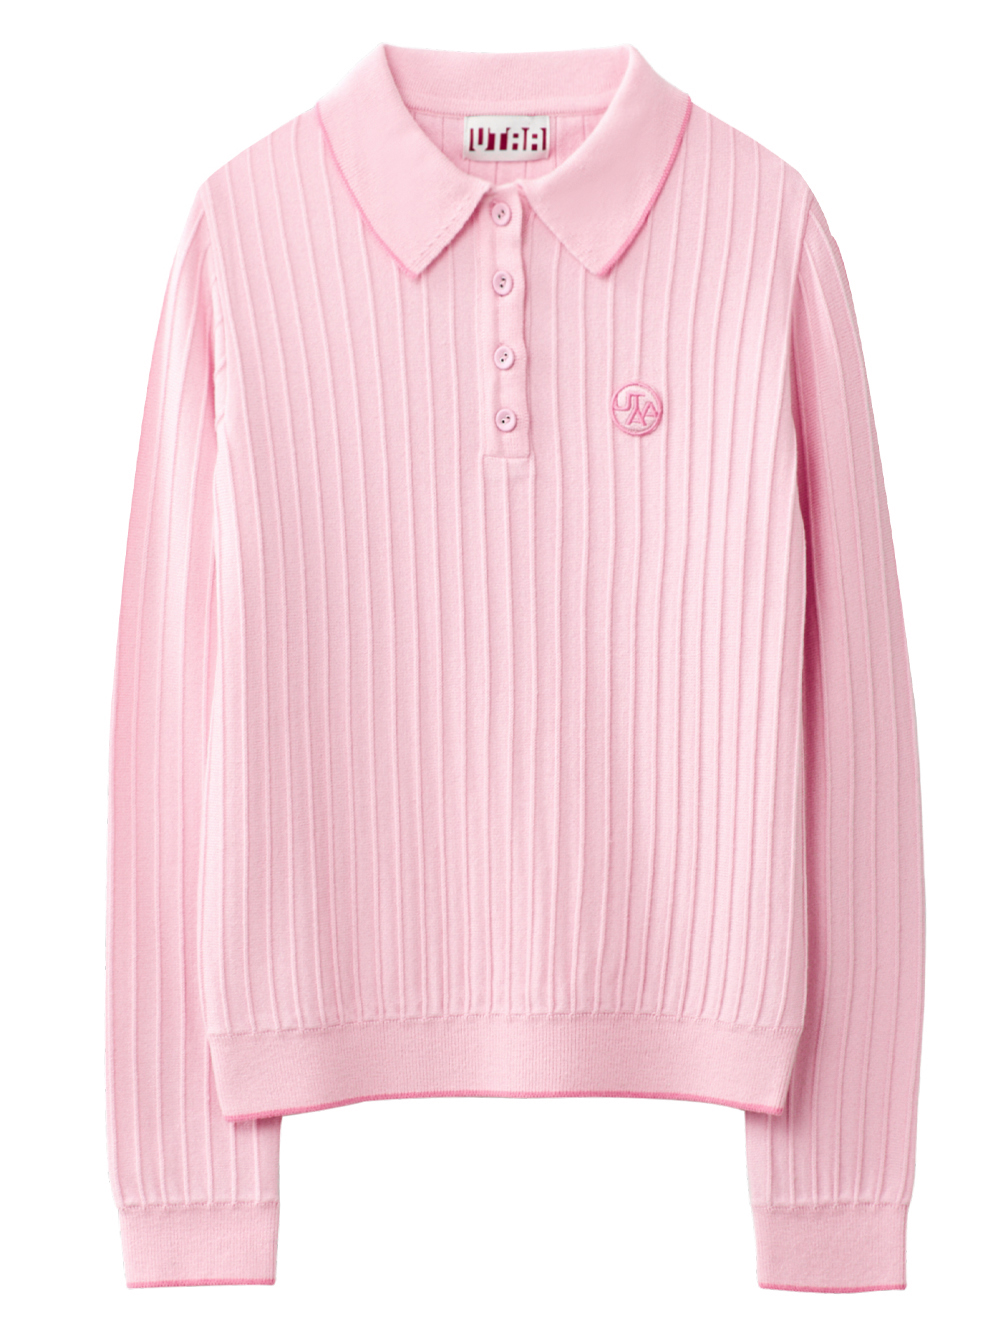 UTAA Vertical Stripe Knit Pullover : Light Pink (UB3KTF420LP)